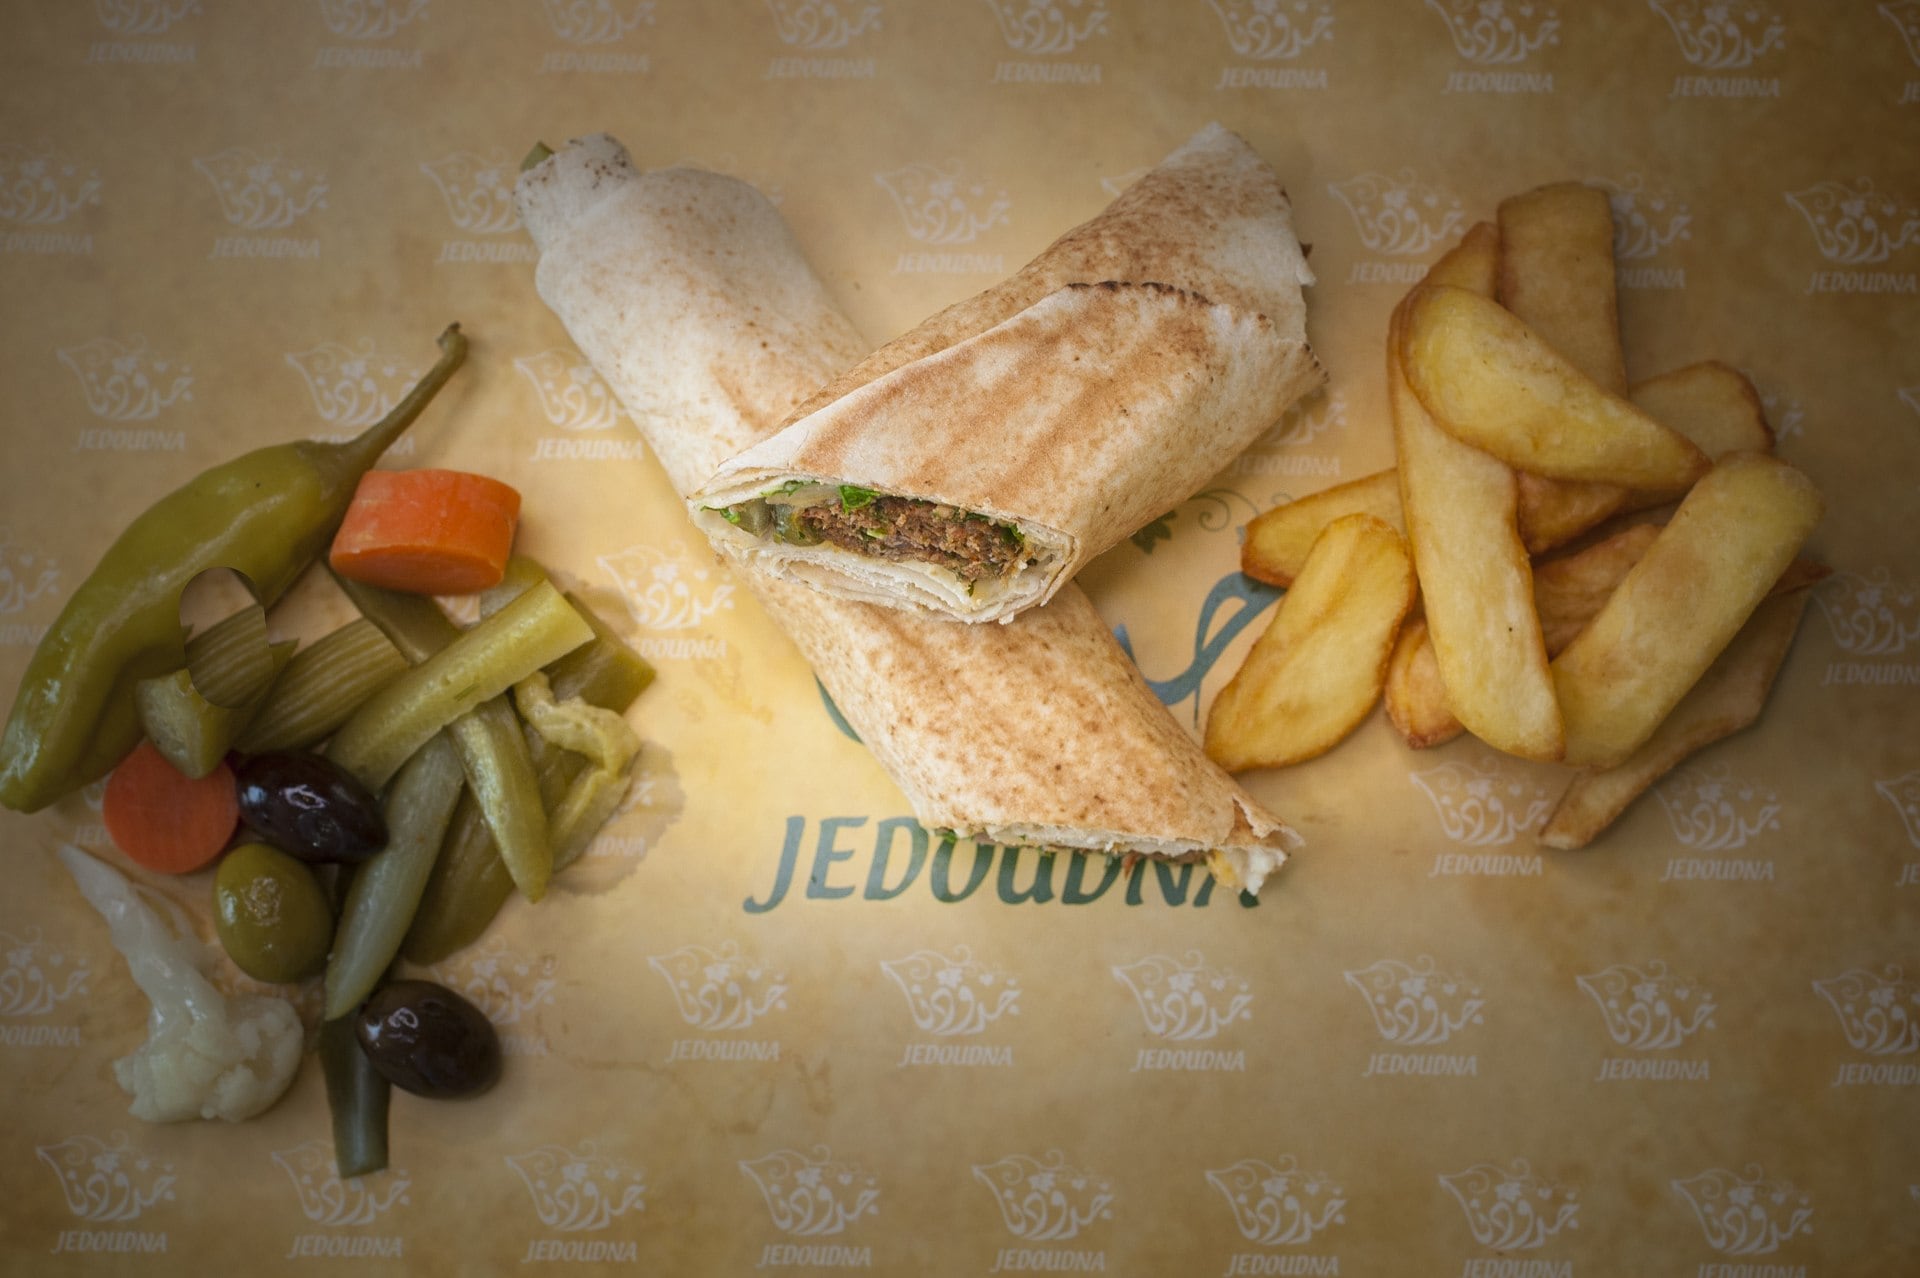 Jedoudna Restaurant & Cafe